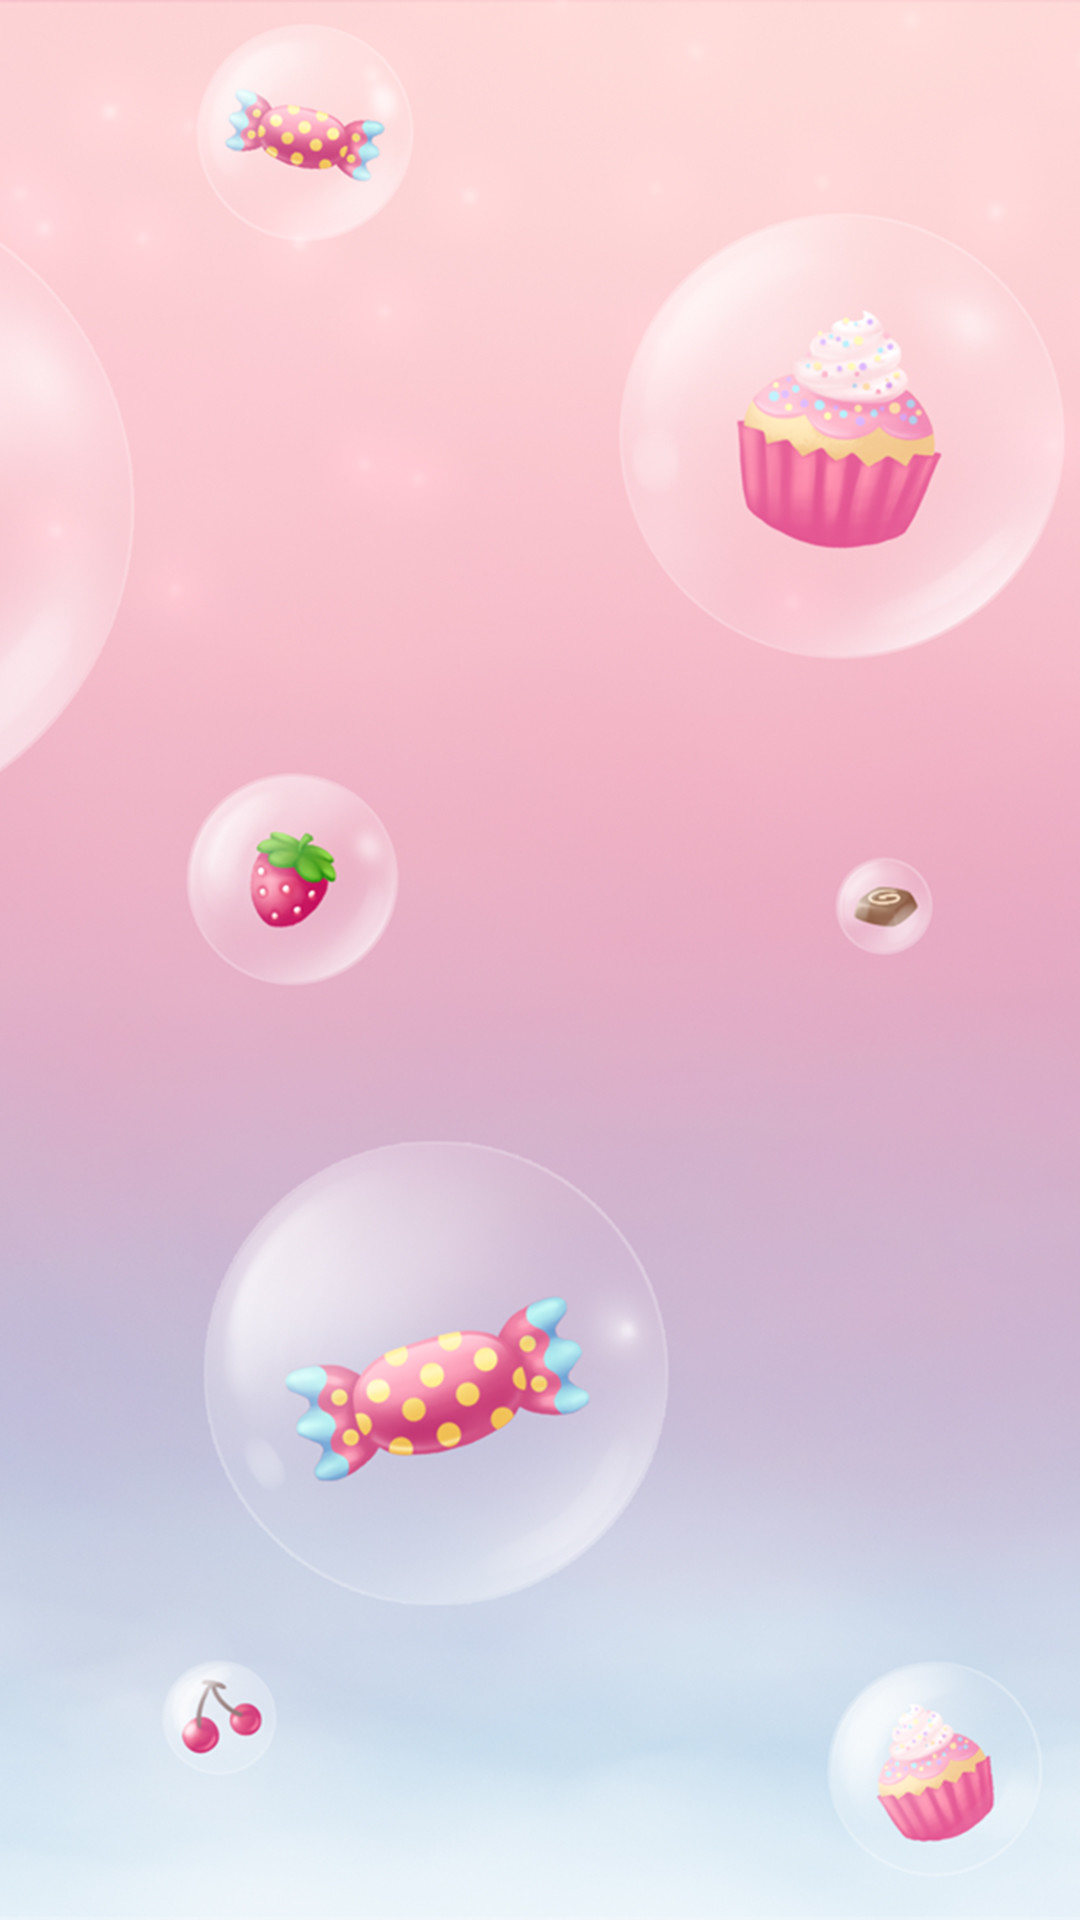 1080x1920 Girly cute iPhone6s wallpaper : cupcakes Â· Walpaper IphoneIphone  WallpaperPink ...